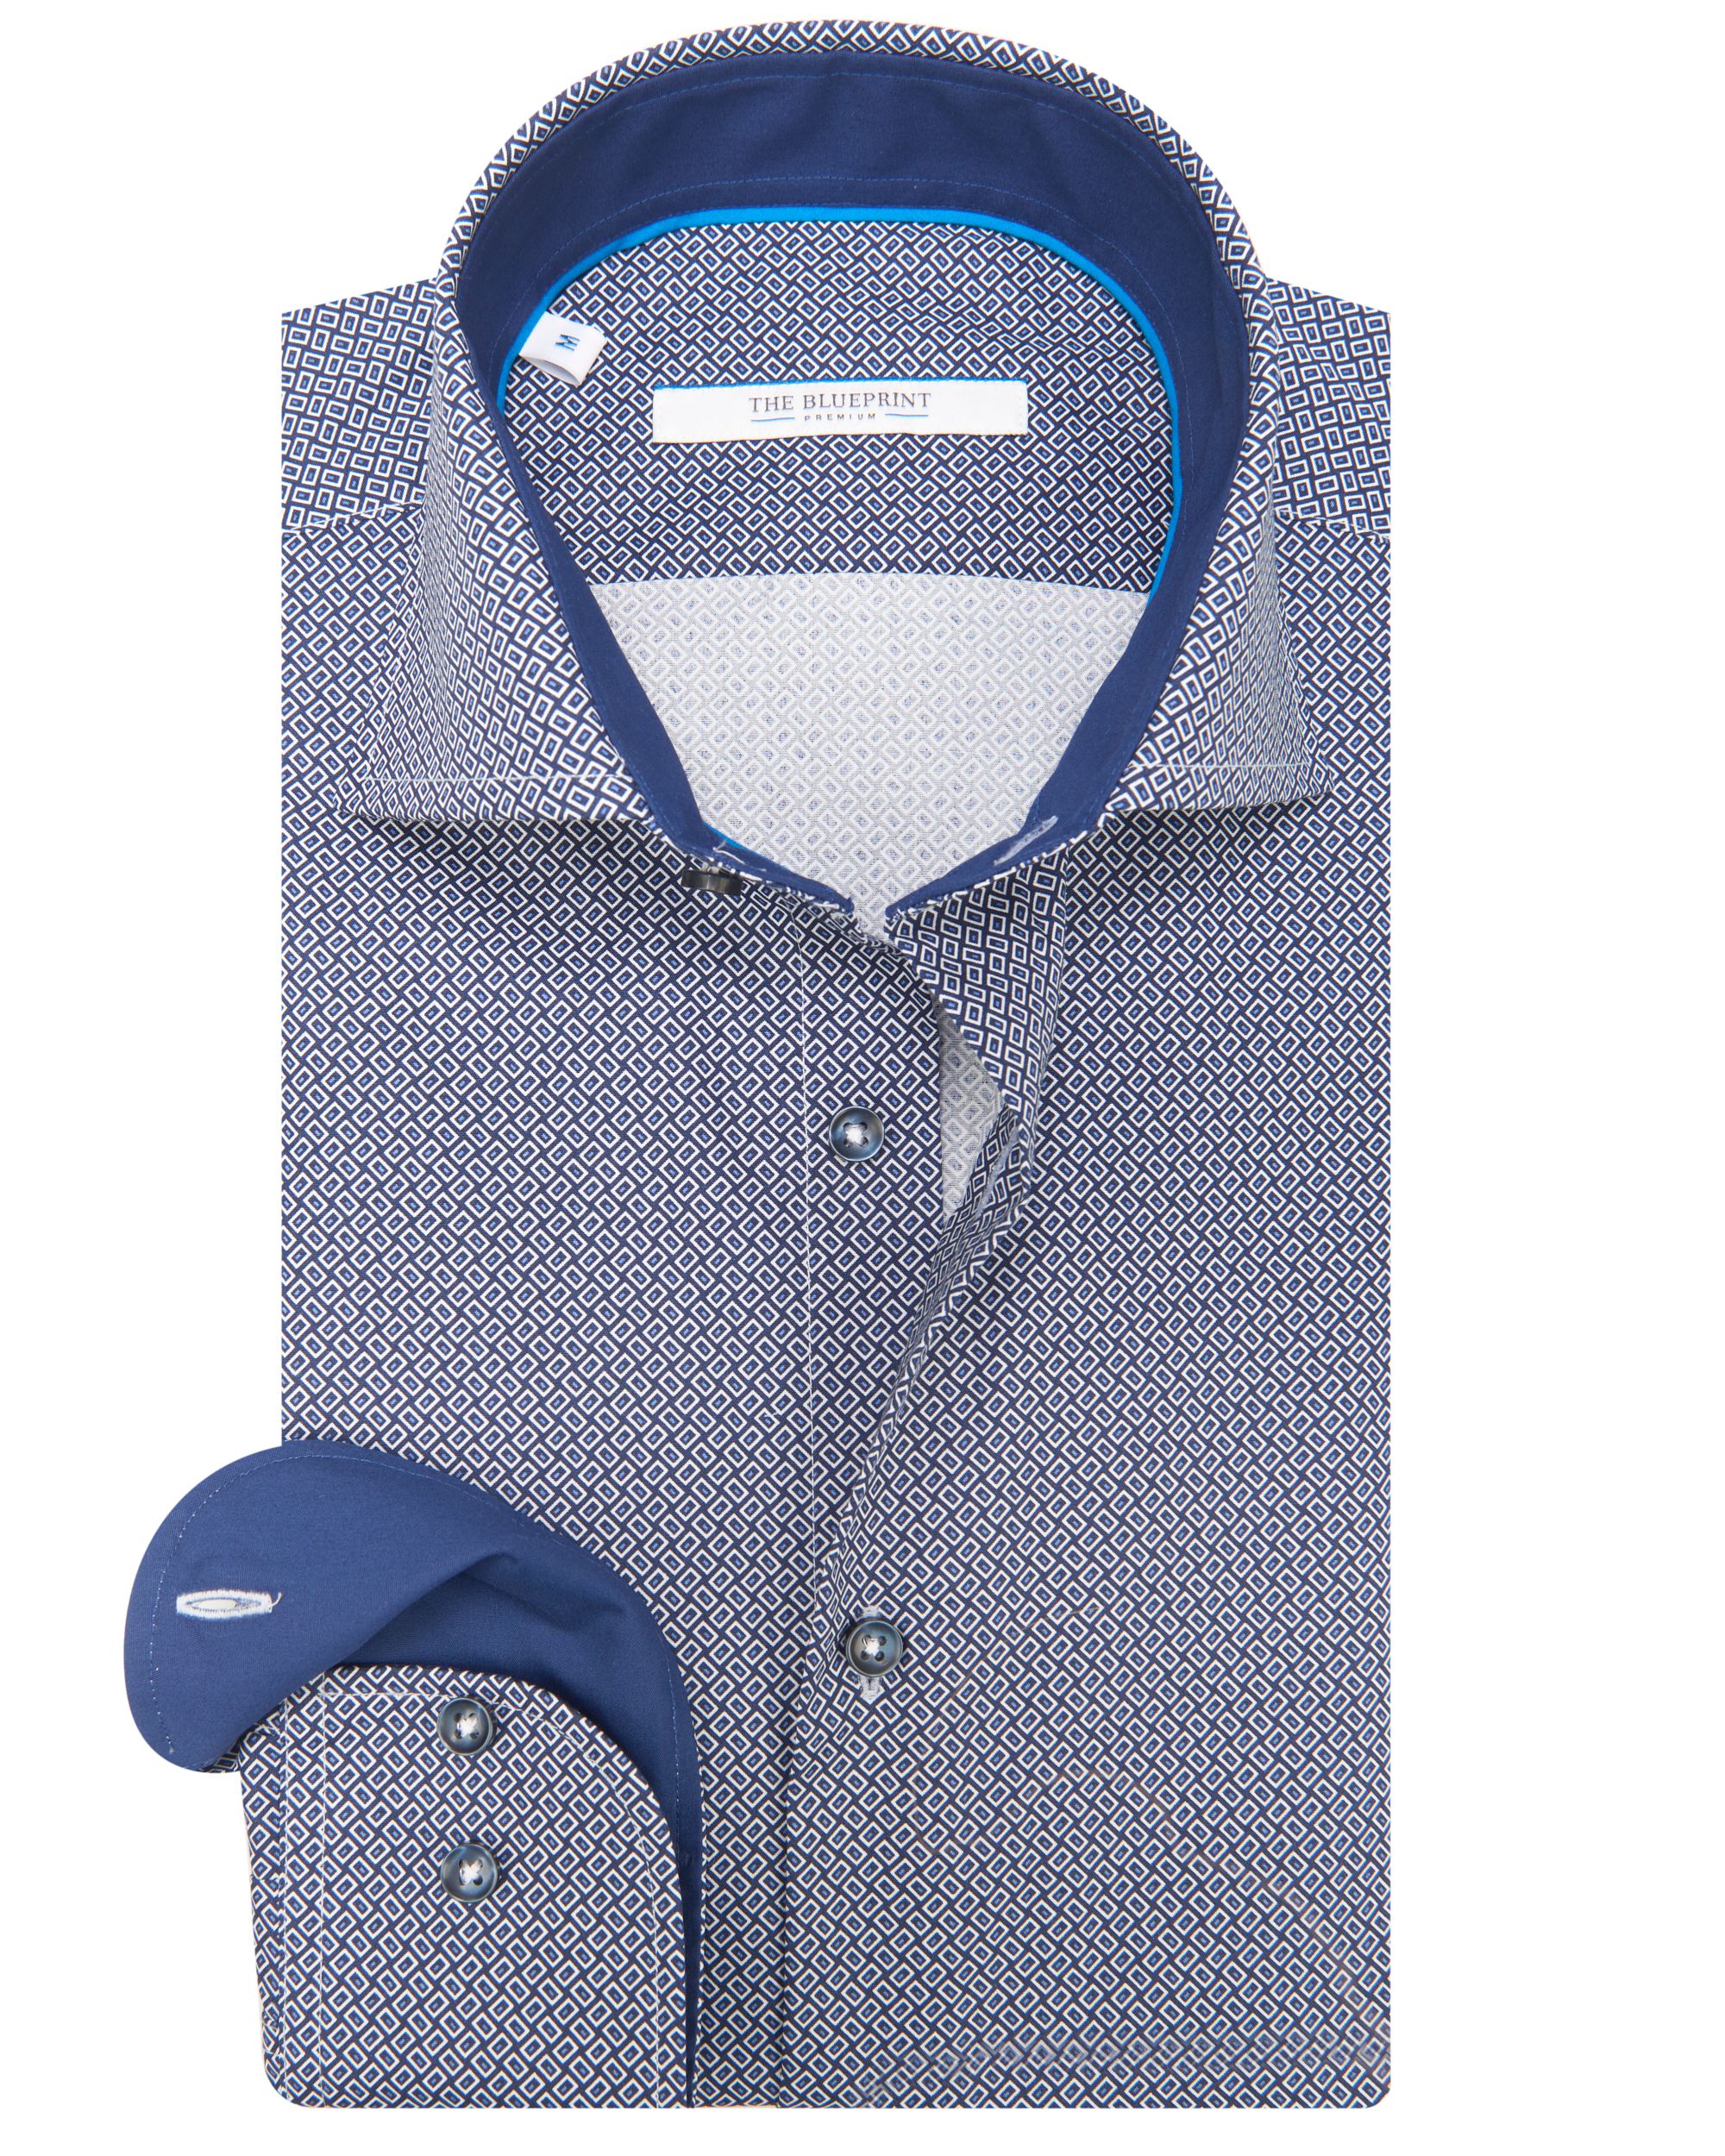 The BLUEPRINT Premium Trendy Overhemd LM Kobalt dessin 078183-001-L